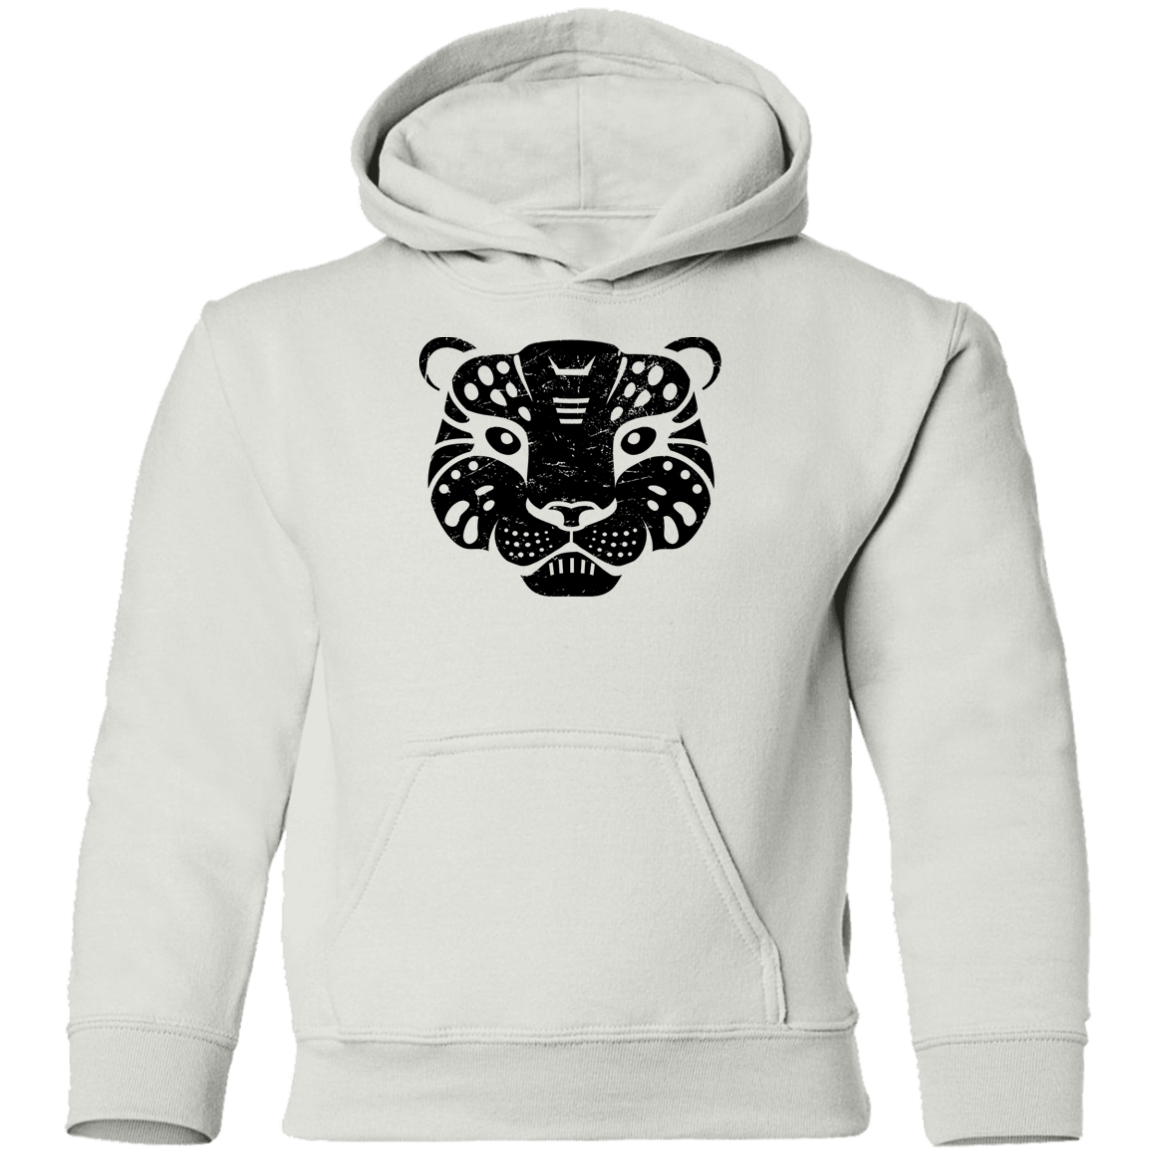 Black Distressed Emblem Hoodies for Kids (Snow Leopard/Denali)